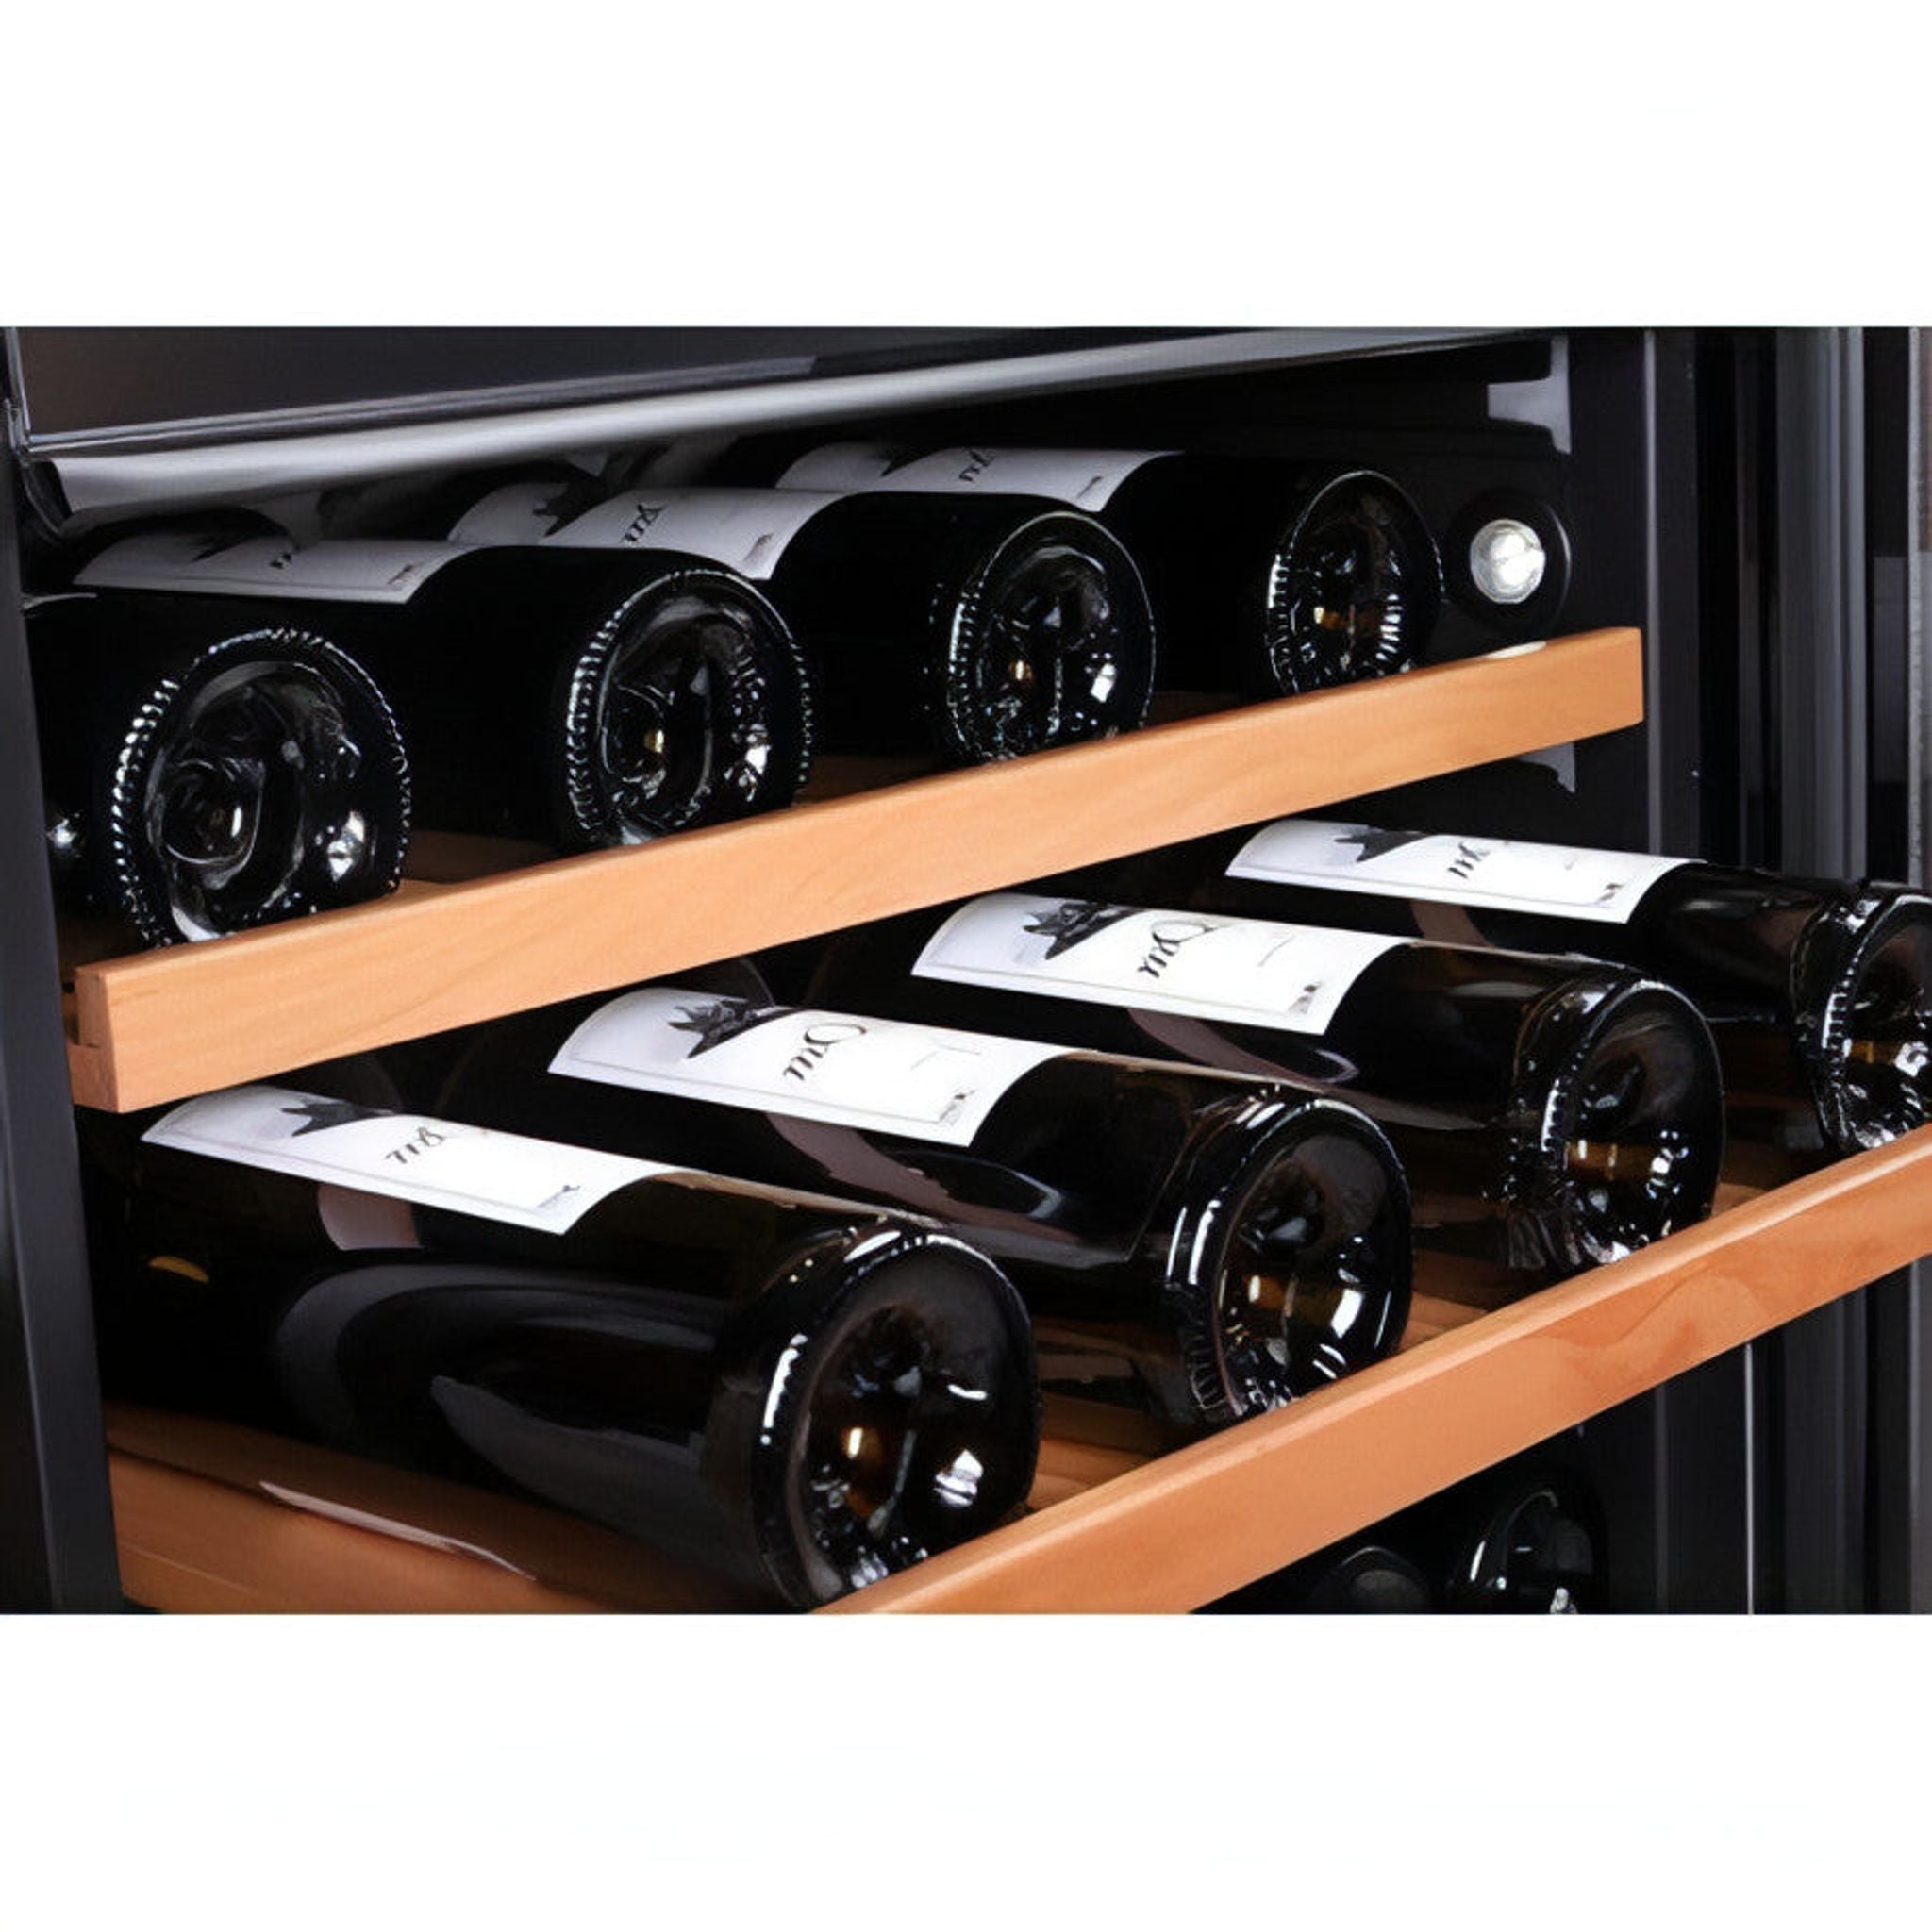 mQuvée - 600mm - Undercounter Wine Fridge - WineCave 700 60D Anthracite Black